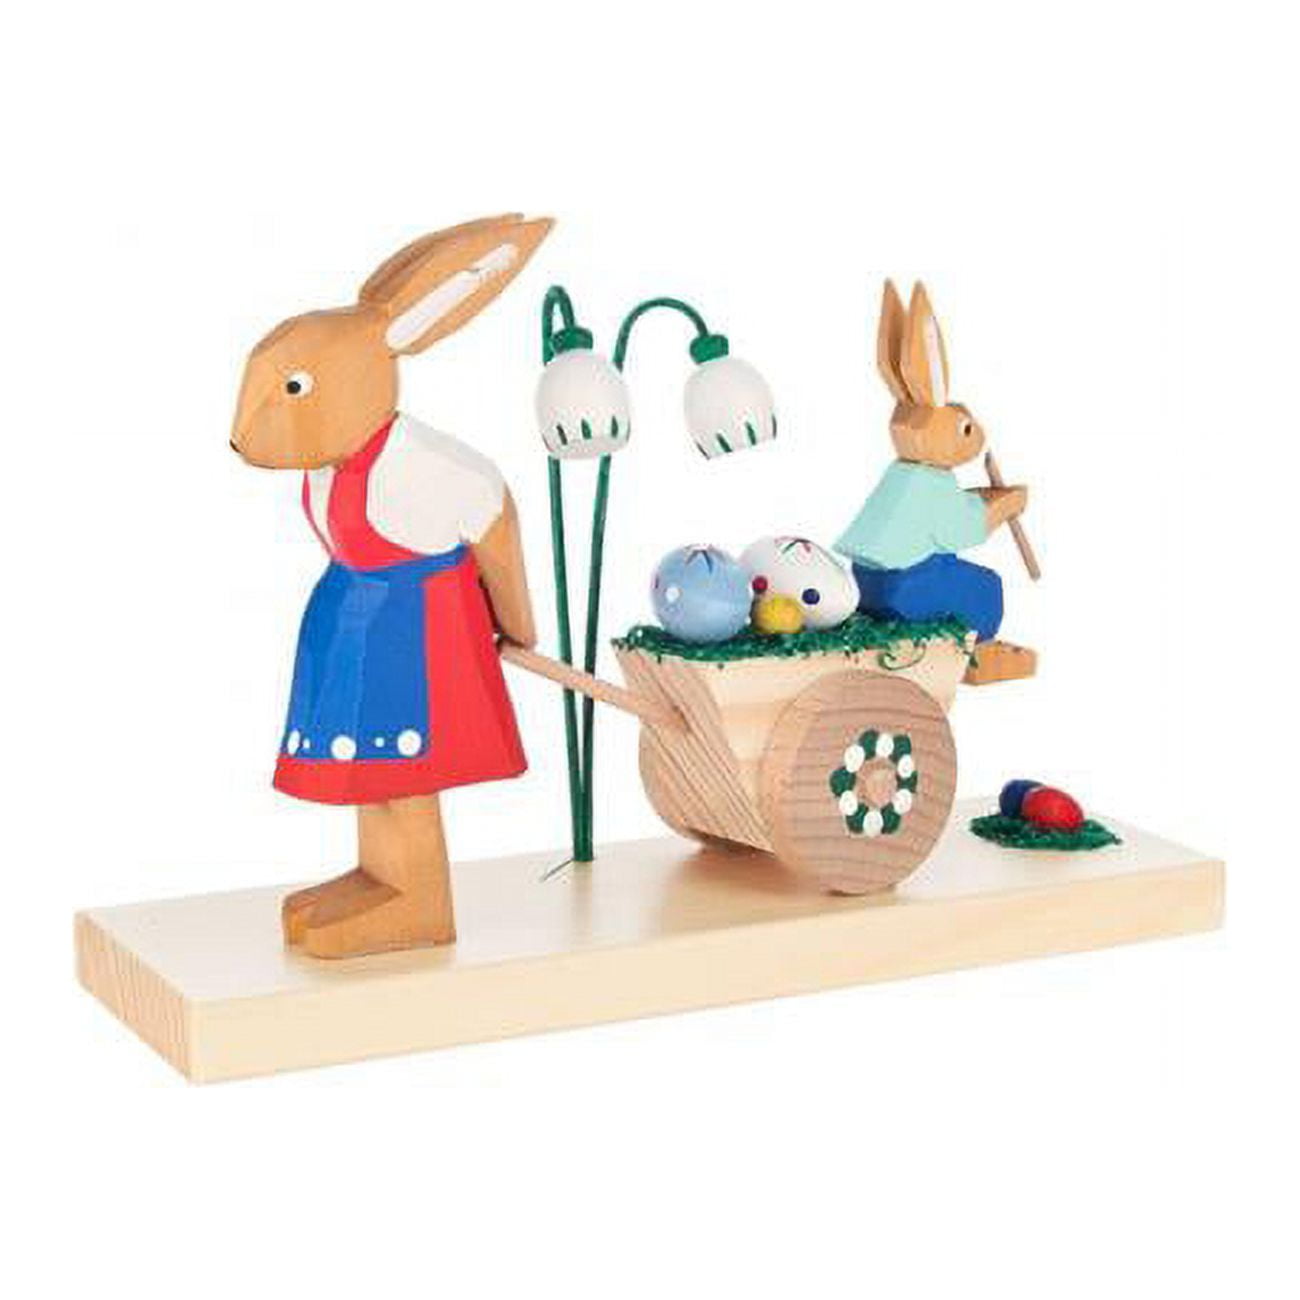 225-063 Dregeno Easter Figures - Rabbit Mother & Son With Cart